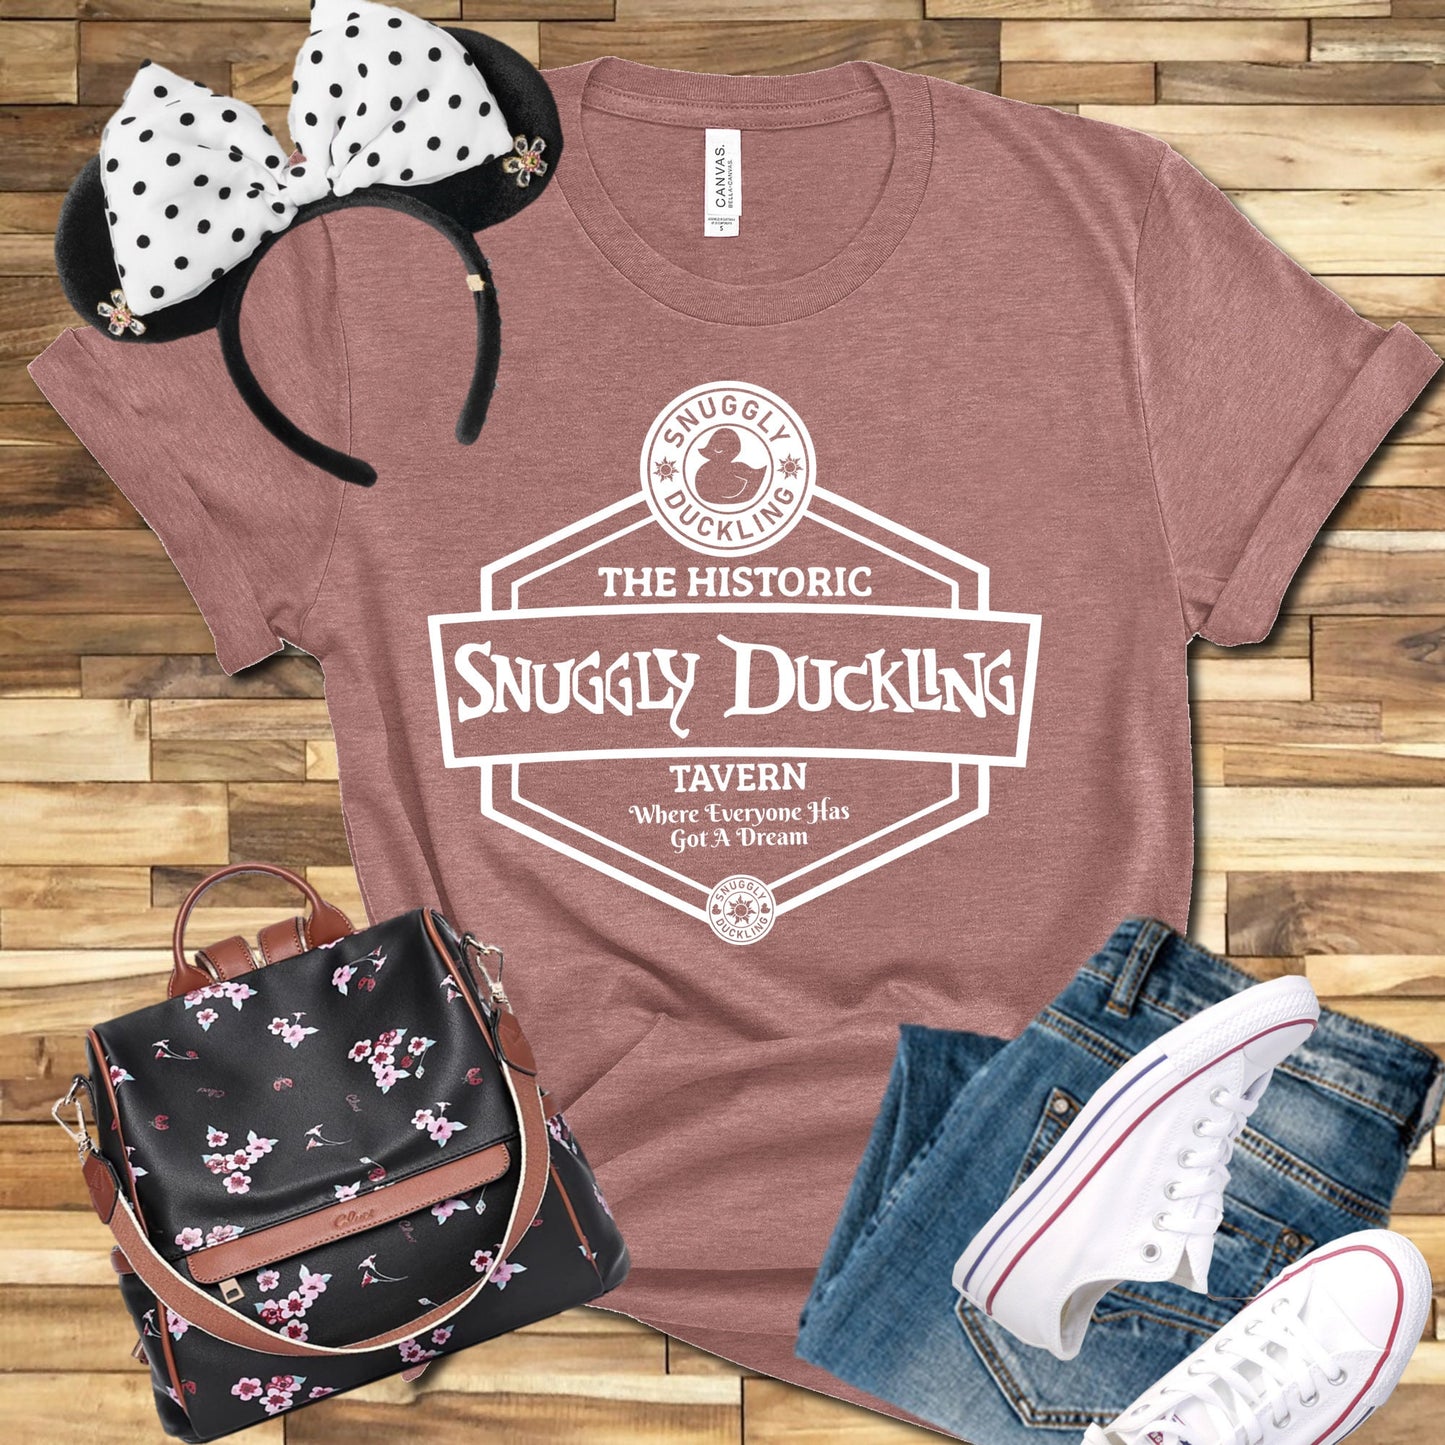 Snuggly Duckling Tavern Shirt, Home Shirt, Disney Trip Shirt, Vacation Shirt, Park Shirt, Women's Shirt, Unisex Shirt